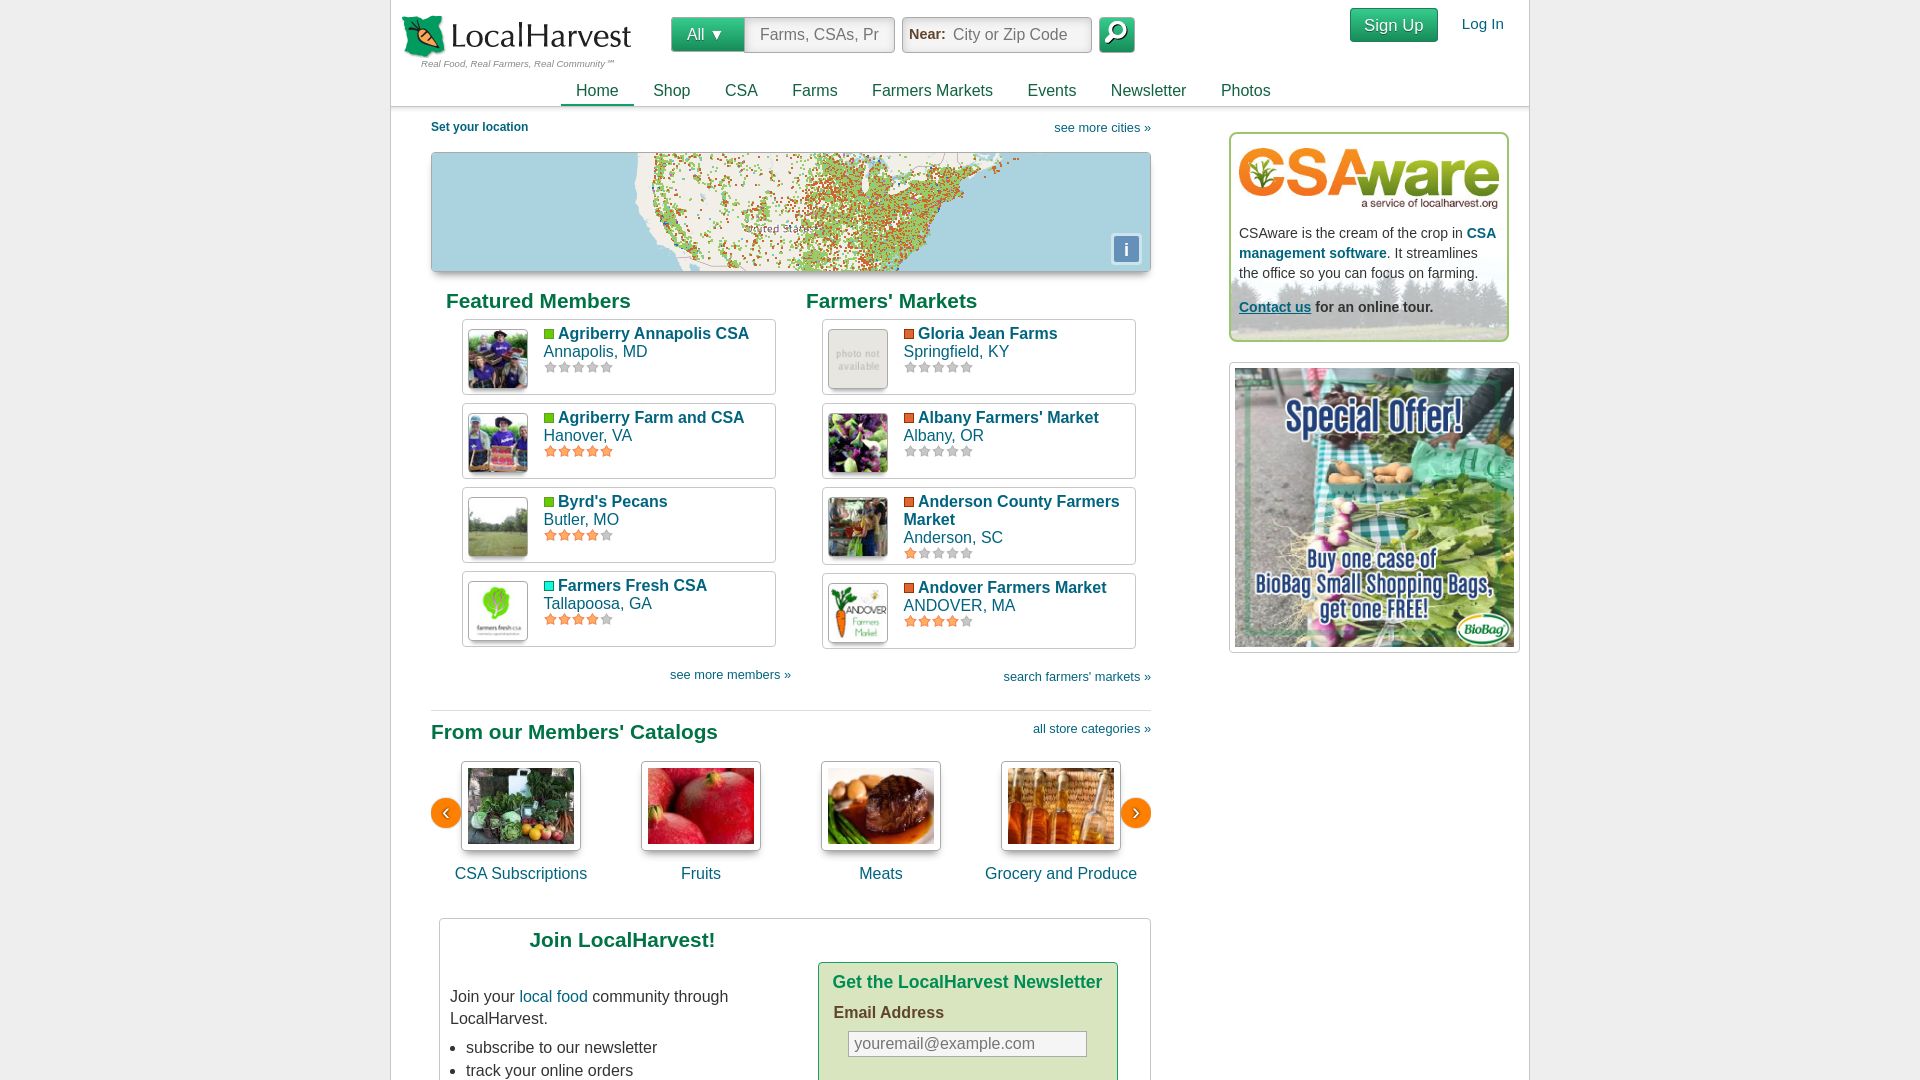 Website status localharvest.org is   ONLINE